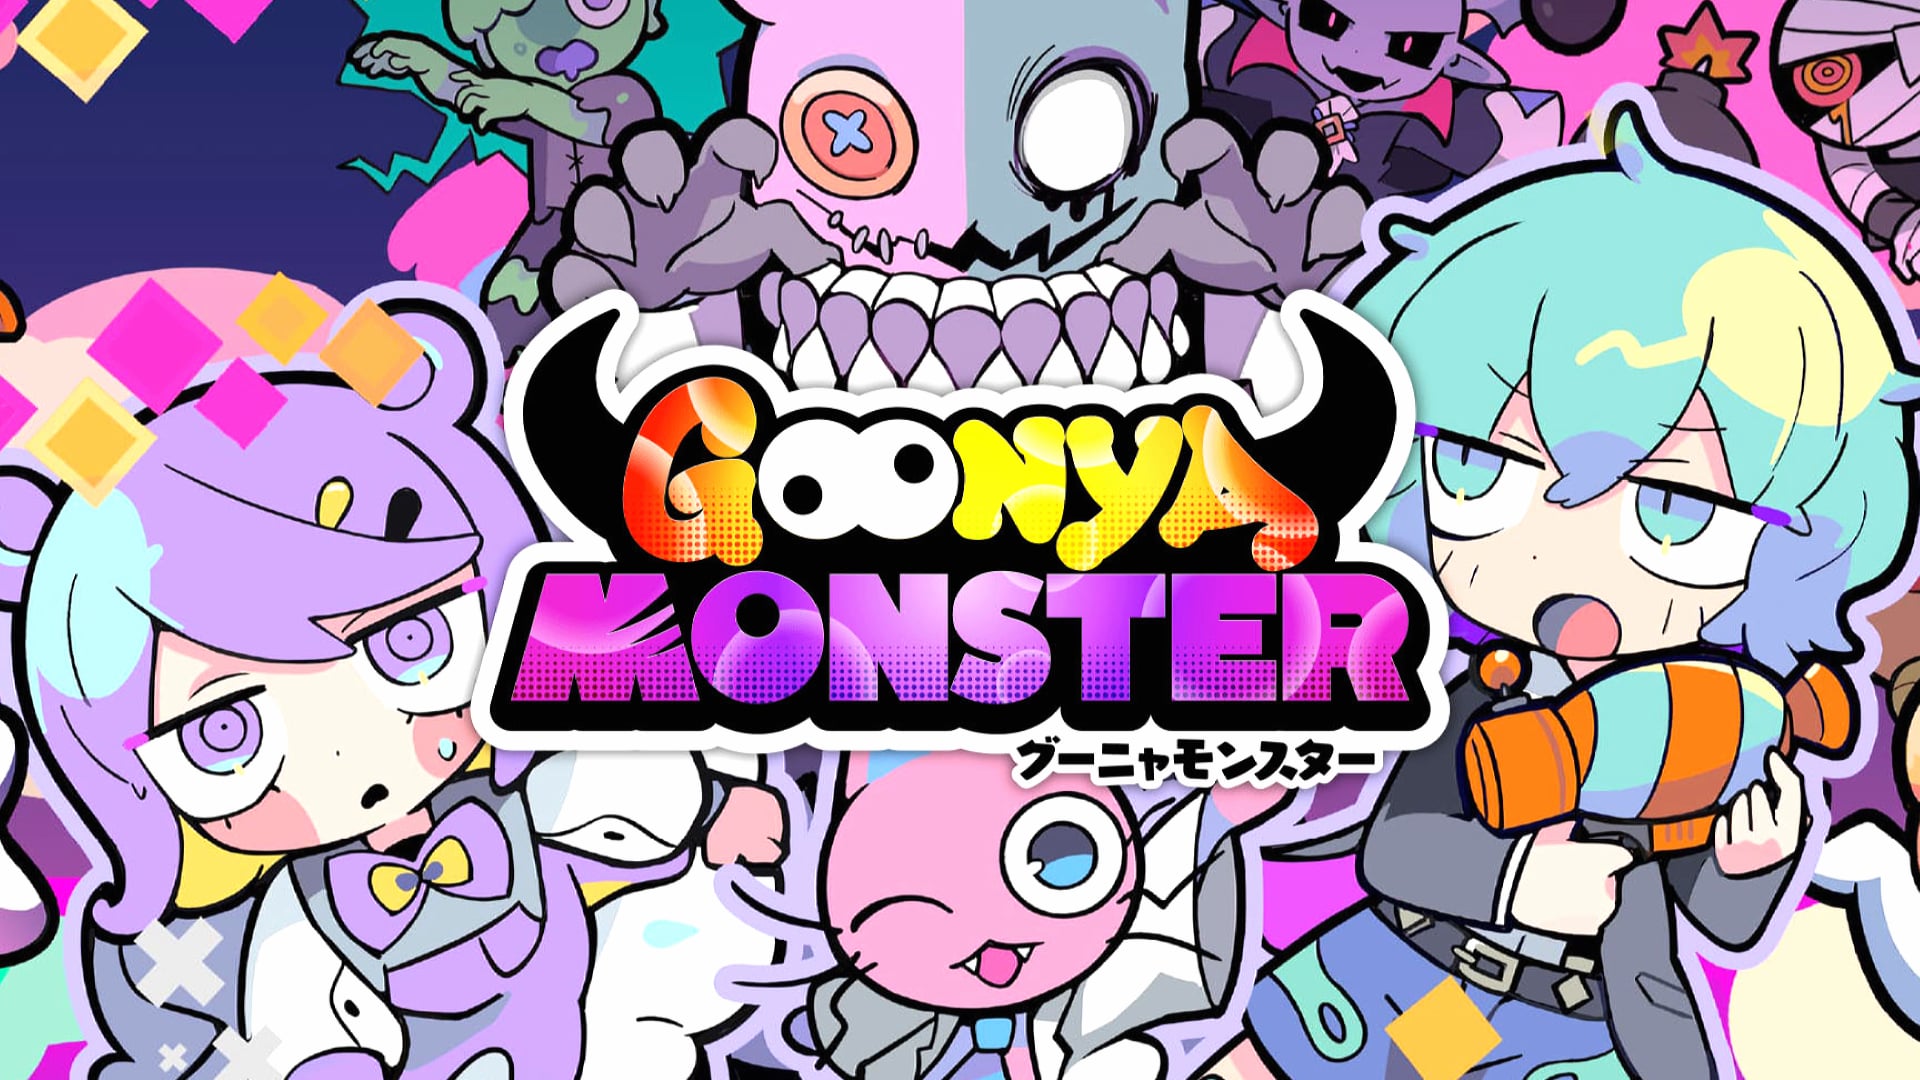 Goonya Monster at 1024 x 1024 iPad size wallpapers HD quality